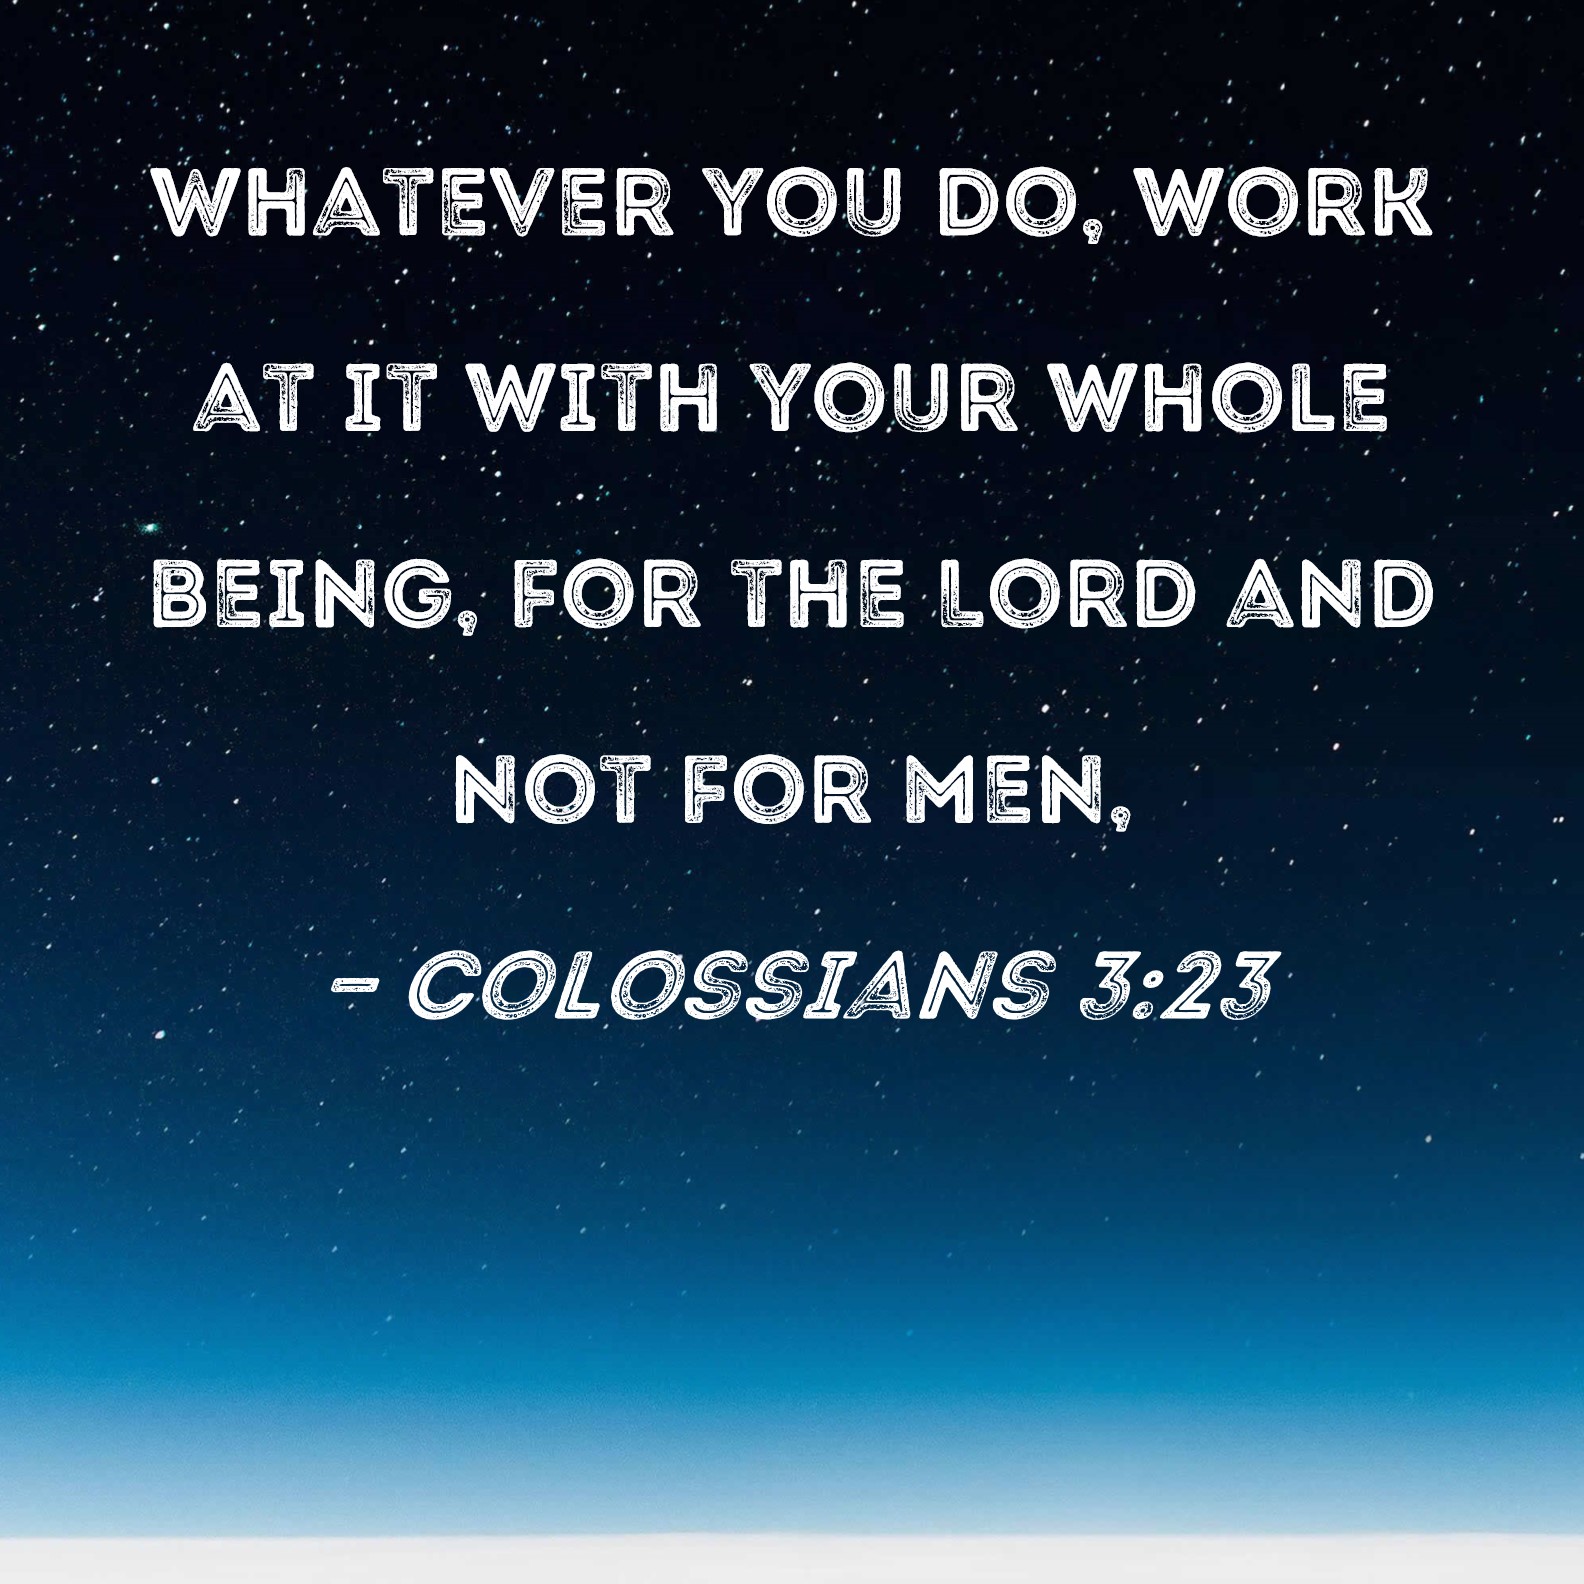 do your work unto god not man